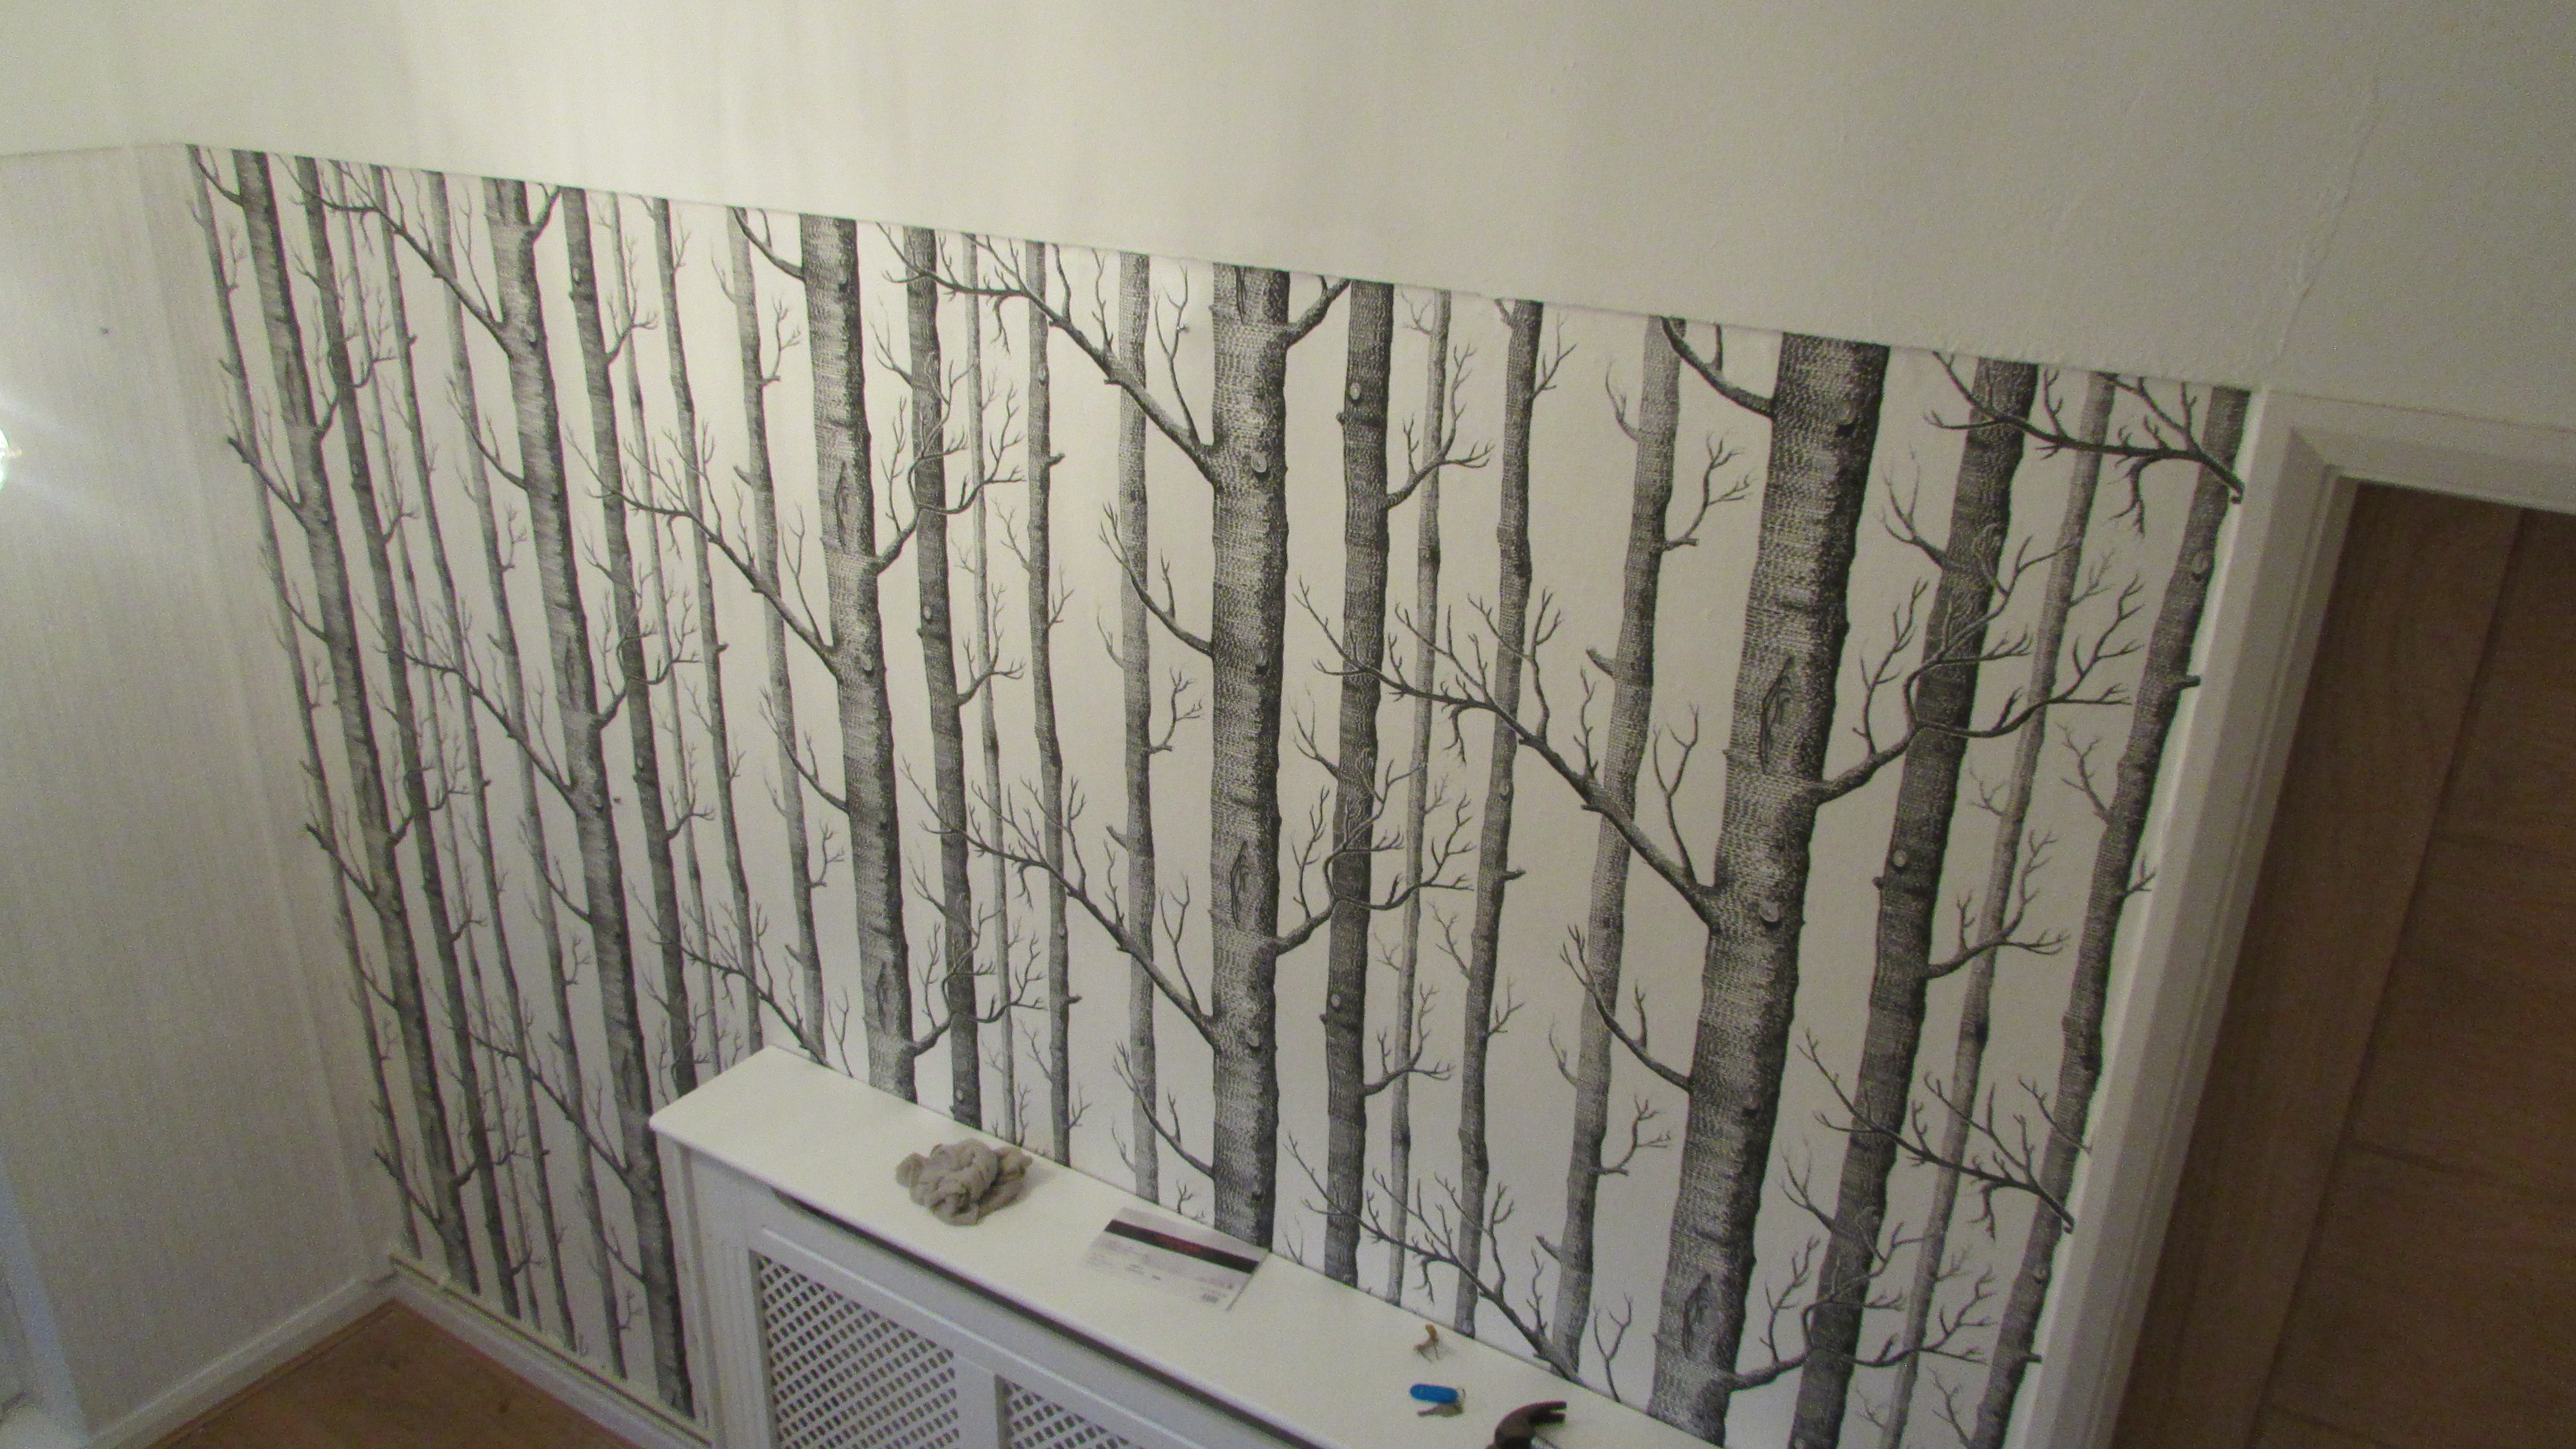 tree wallpaper uk,product,wall,room,interior design,tile